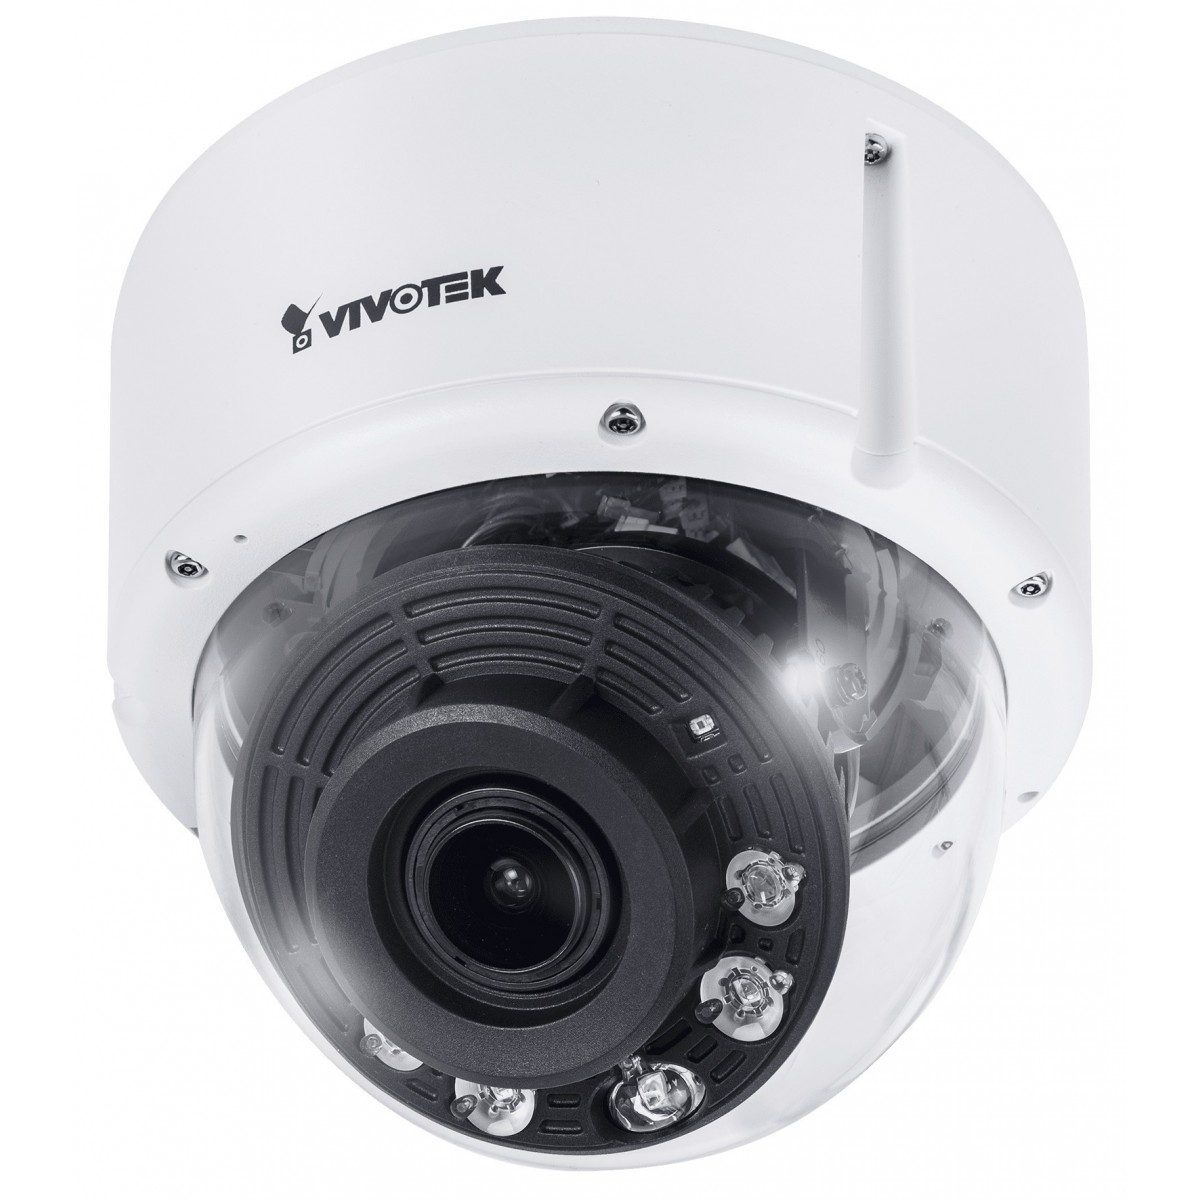 VIVOTEK FD9365-EHTV - IP security camera - Outdoor - Wired - CE - LVD - FCC Class A - VCCI - C-Tick - UL - Dome - Ceiling